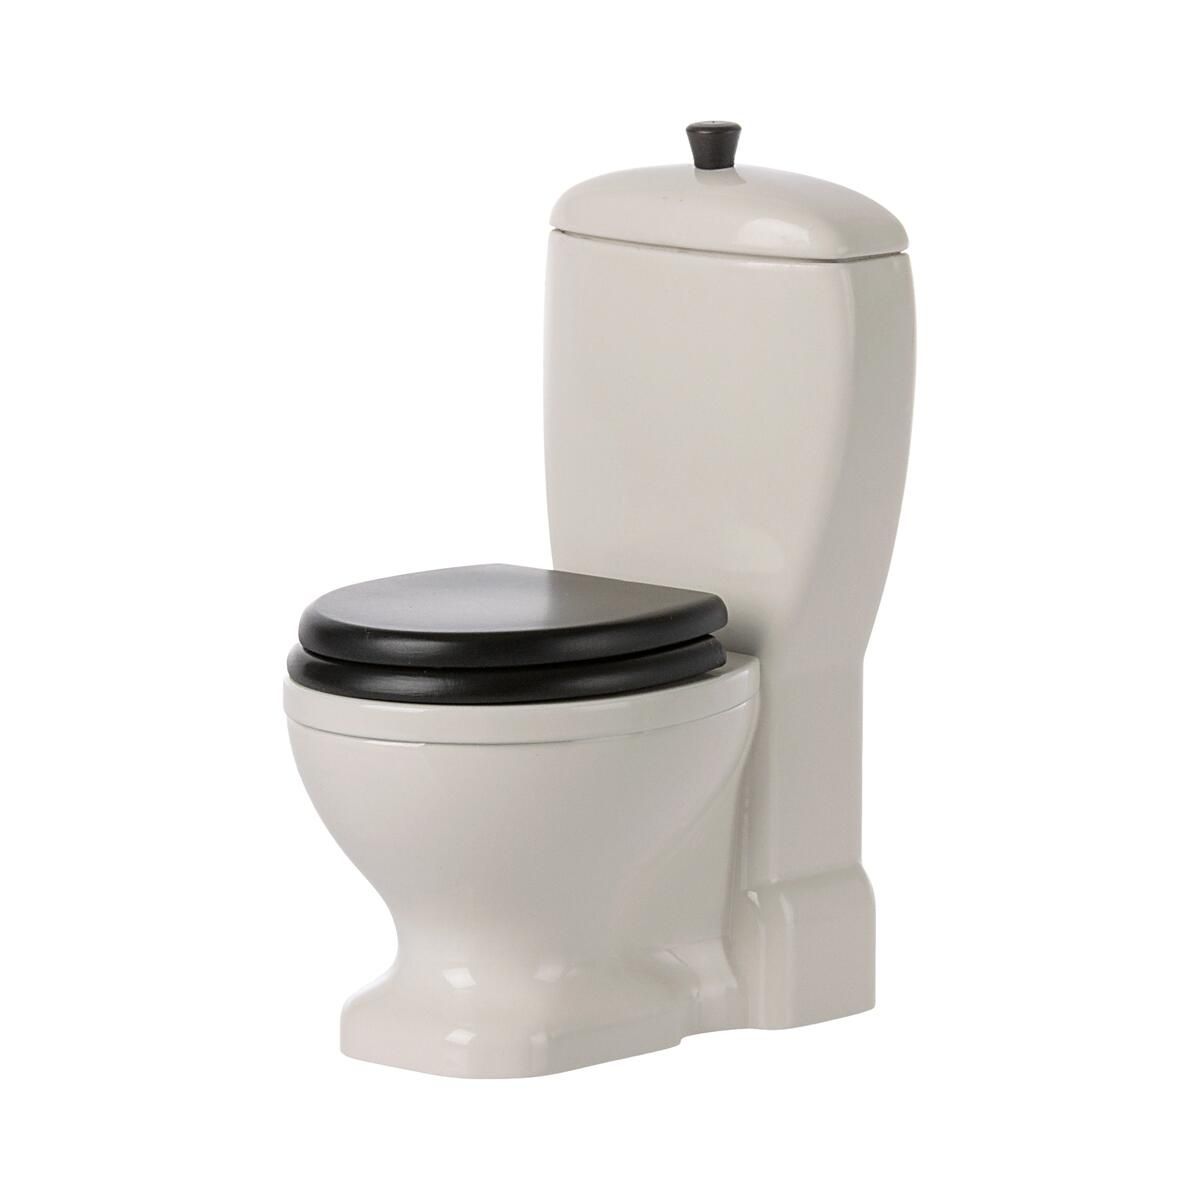 Miniature toilet fra Maileg i hvid med blåt toiletbræt